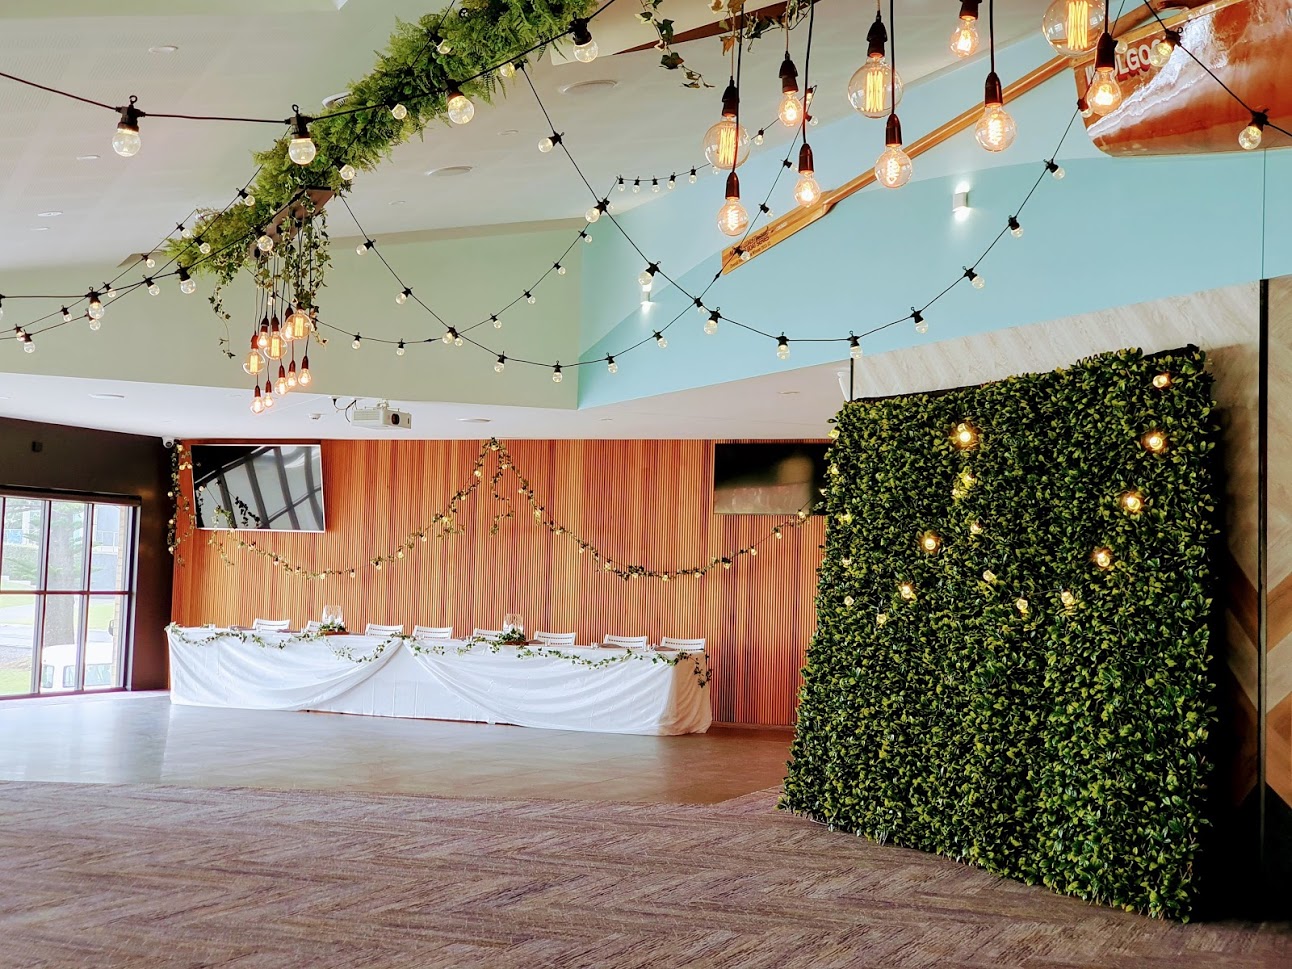 Woolgoolga surf ceiling festoon, bridal table, photo booth greenery